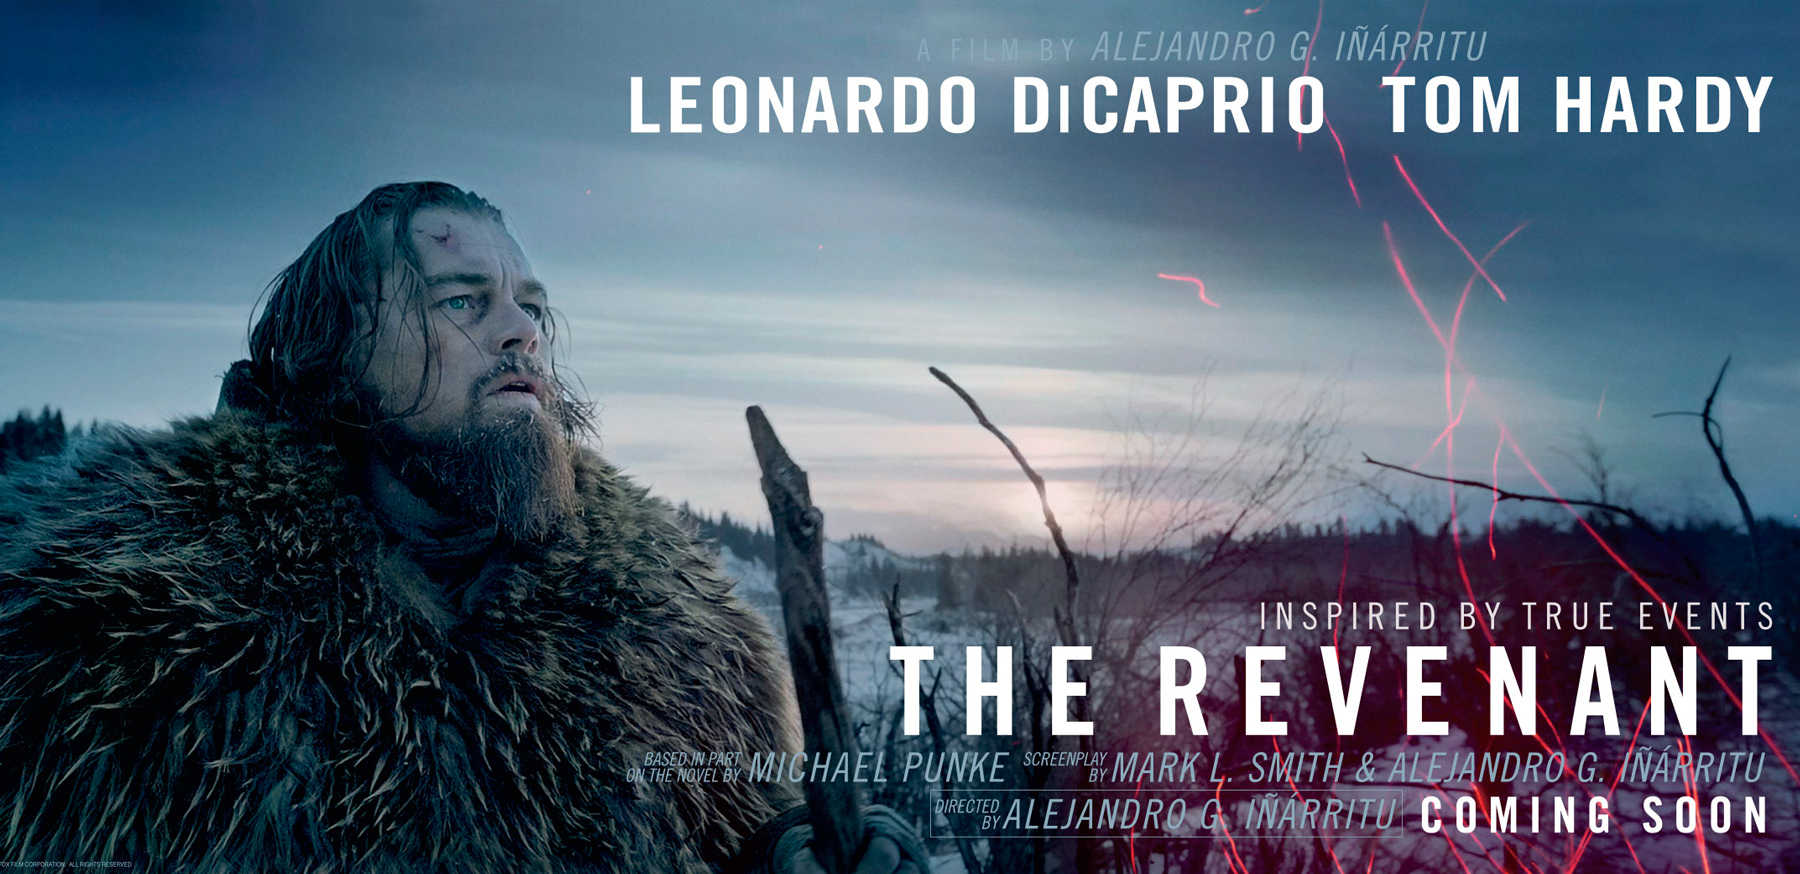 the revenant full movie online free english subtitles